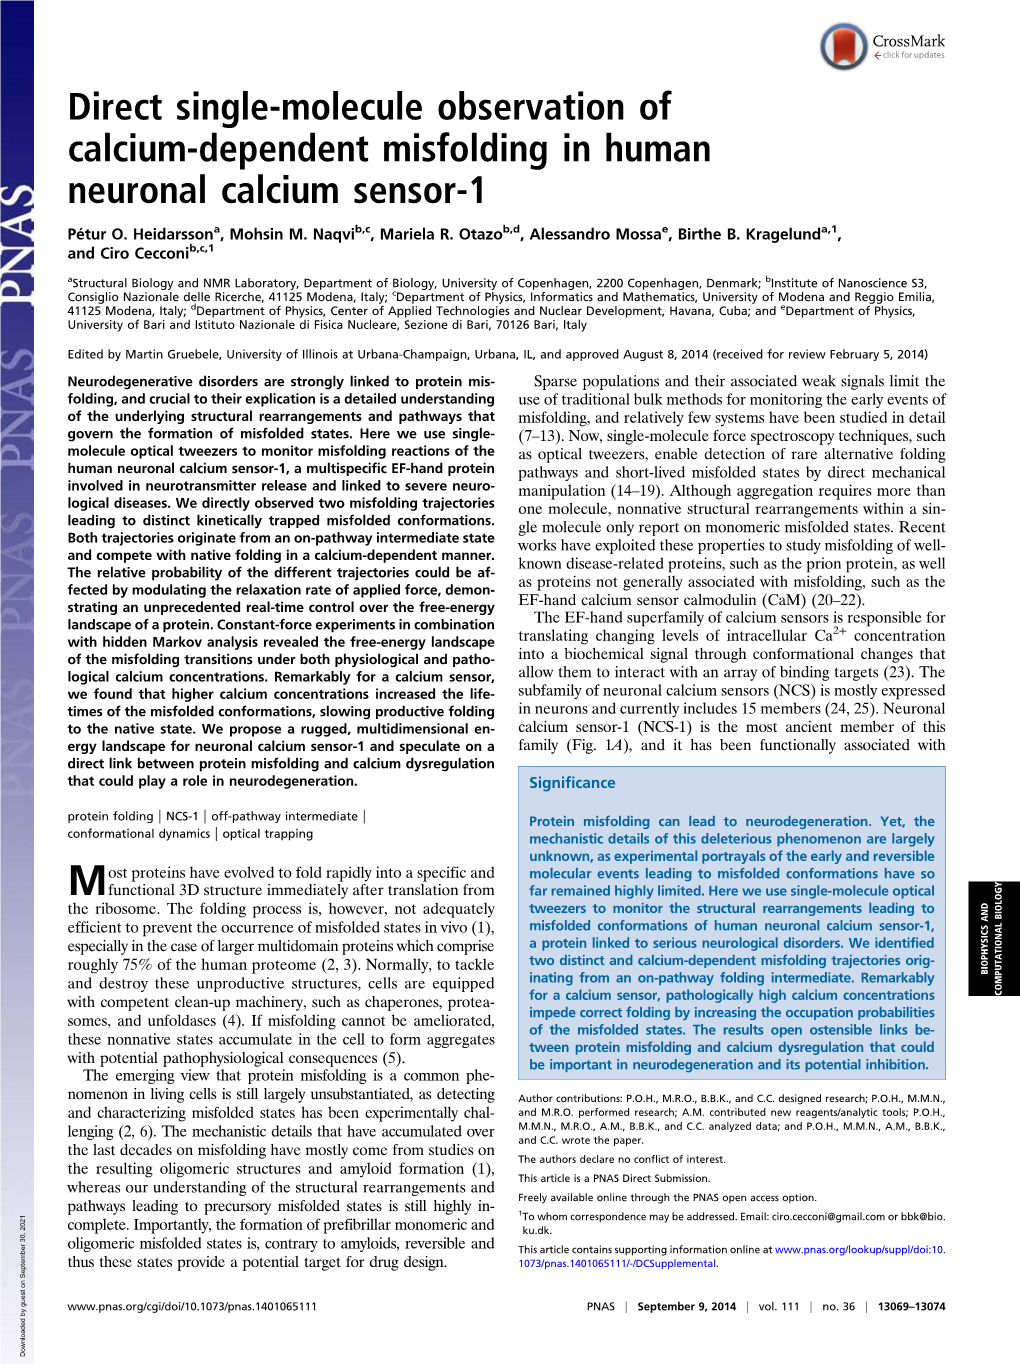 Direct Single-Molecule Observation of Calcium-Dependent Misfolding in Human Neuronal Calcium Sensor-1